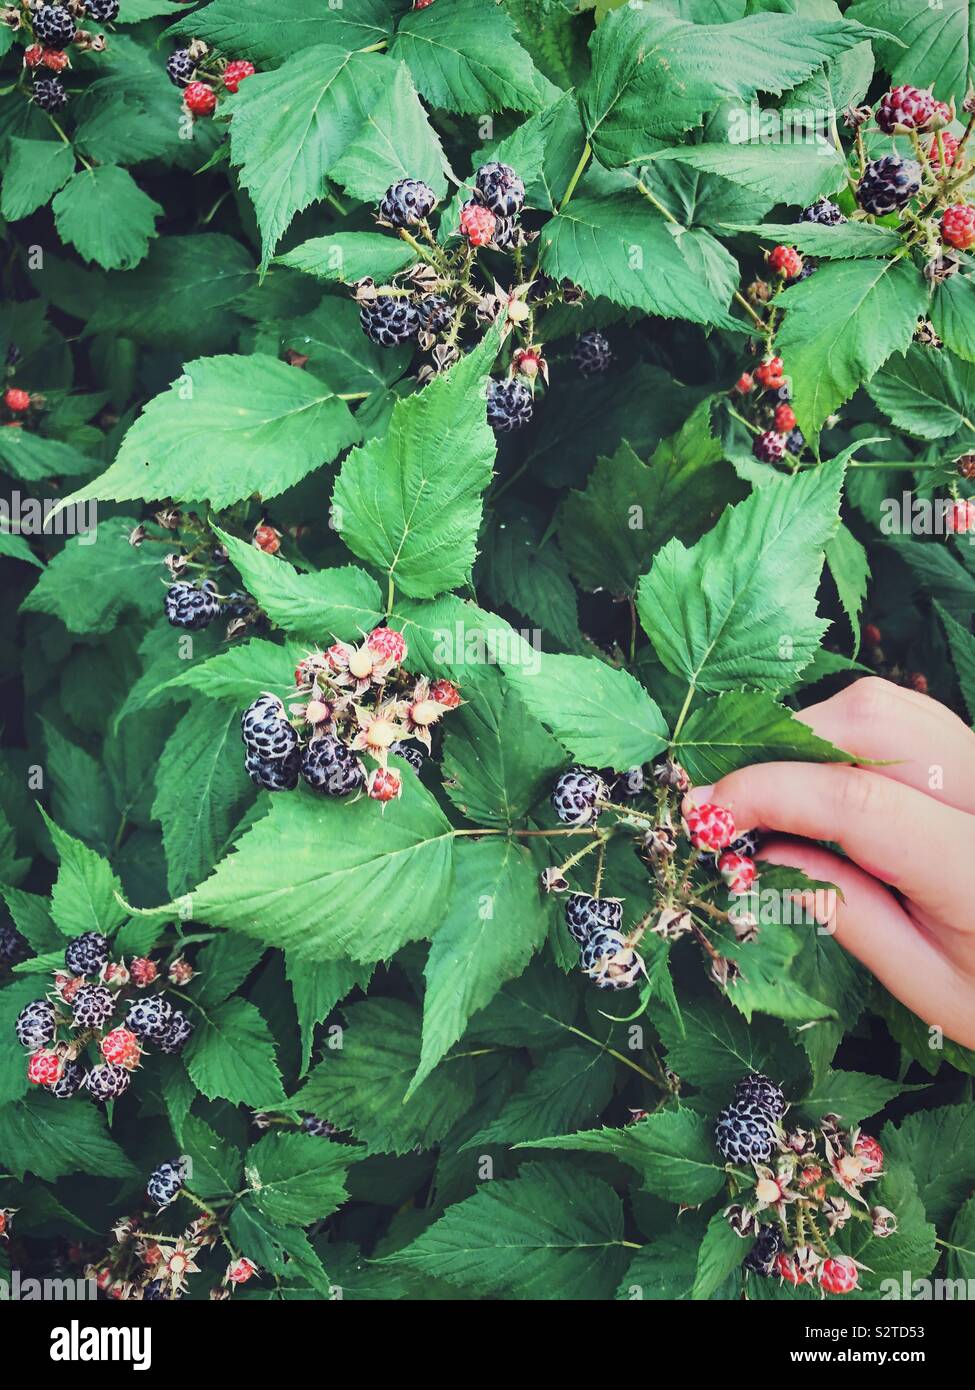 Child’s hand shown picking wild blackberries Stock Photo